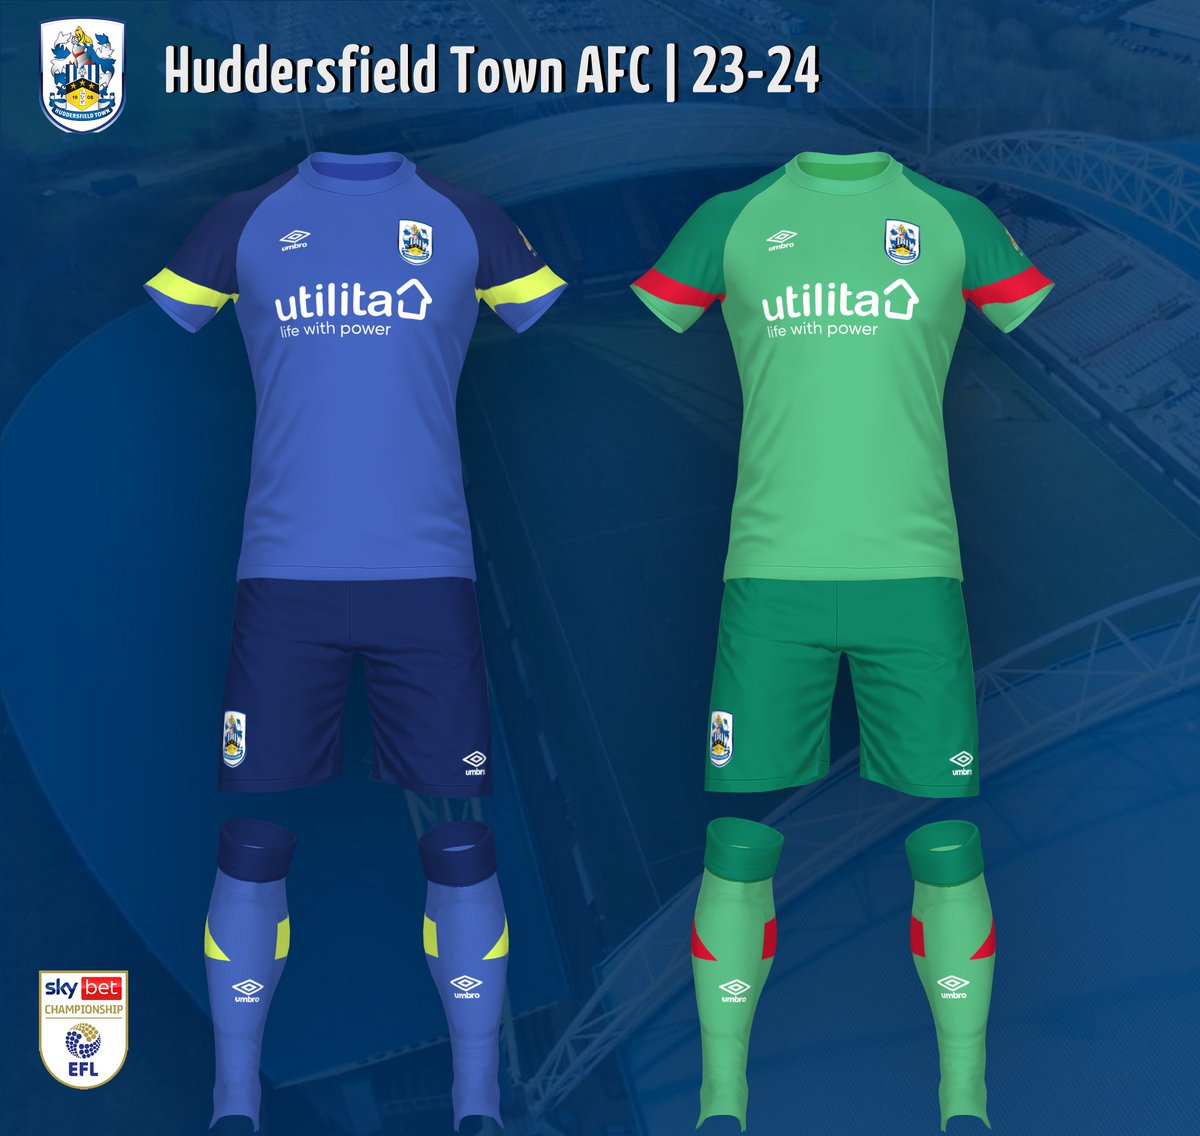 Huddersfield Town AFC | GK's | Championship

⬇️drive.google.com/drive/folders/…

#HuddersfieldTown #Championship #Umbro